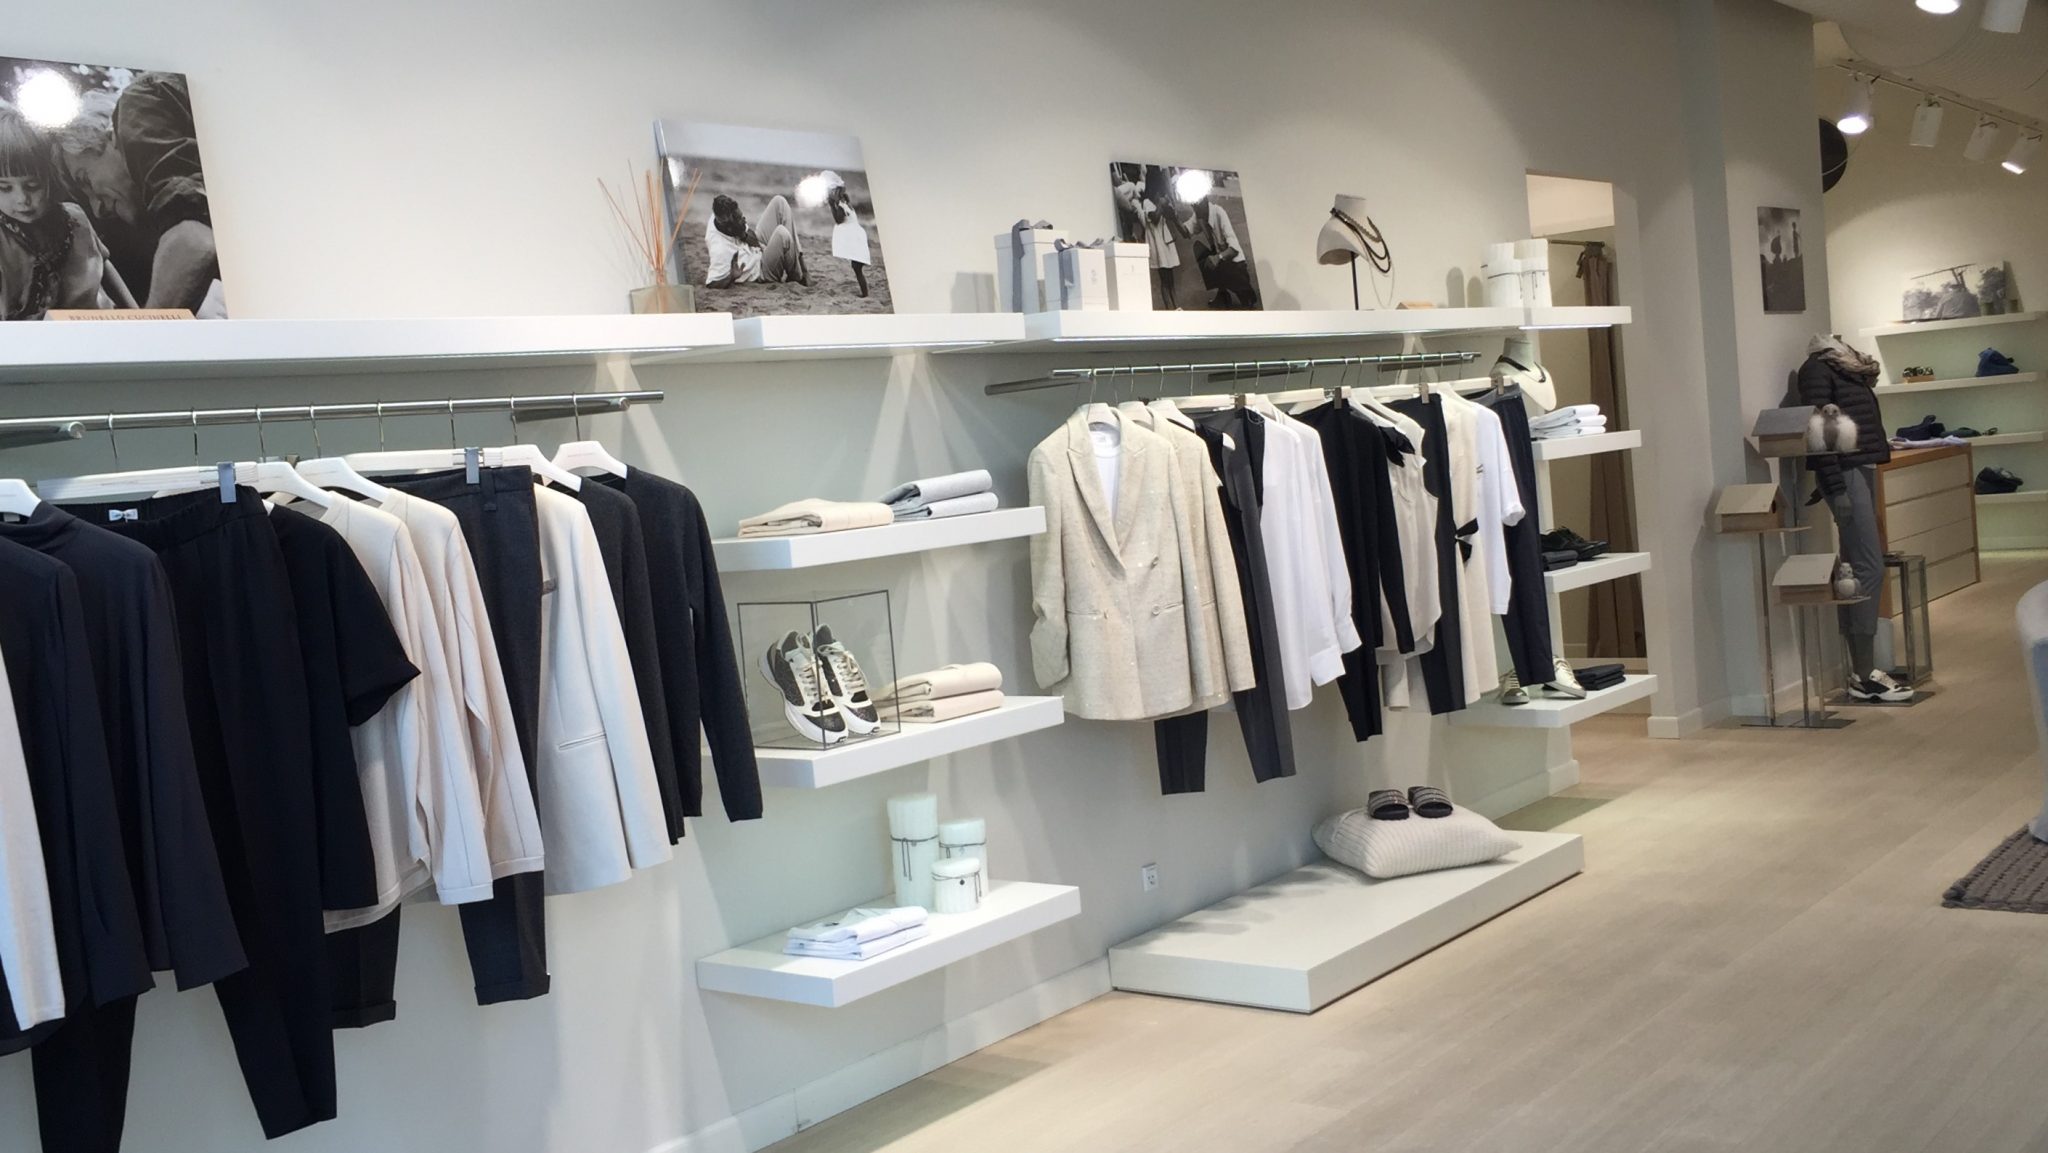 Kopenhagen | Inspiratiereis Retail Design, part 2 - Inspiratiereizen